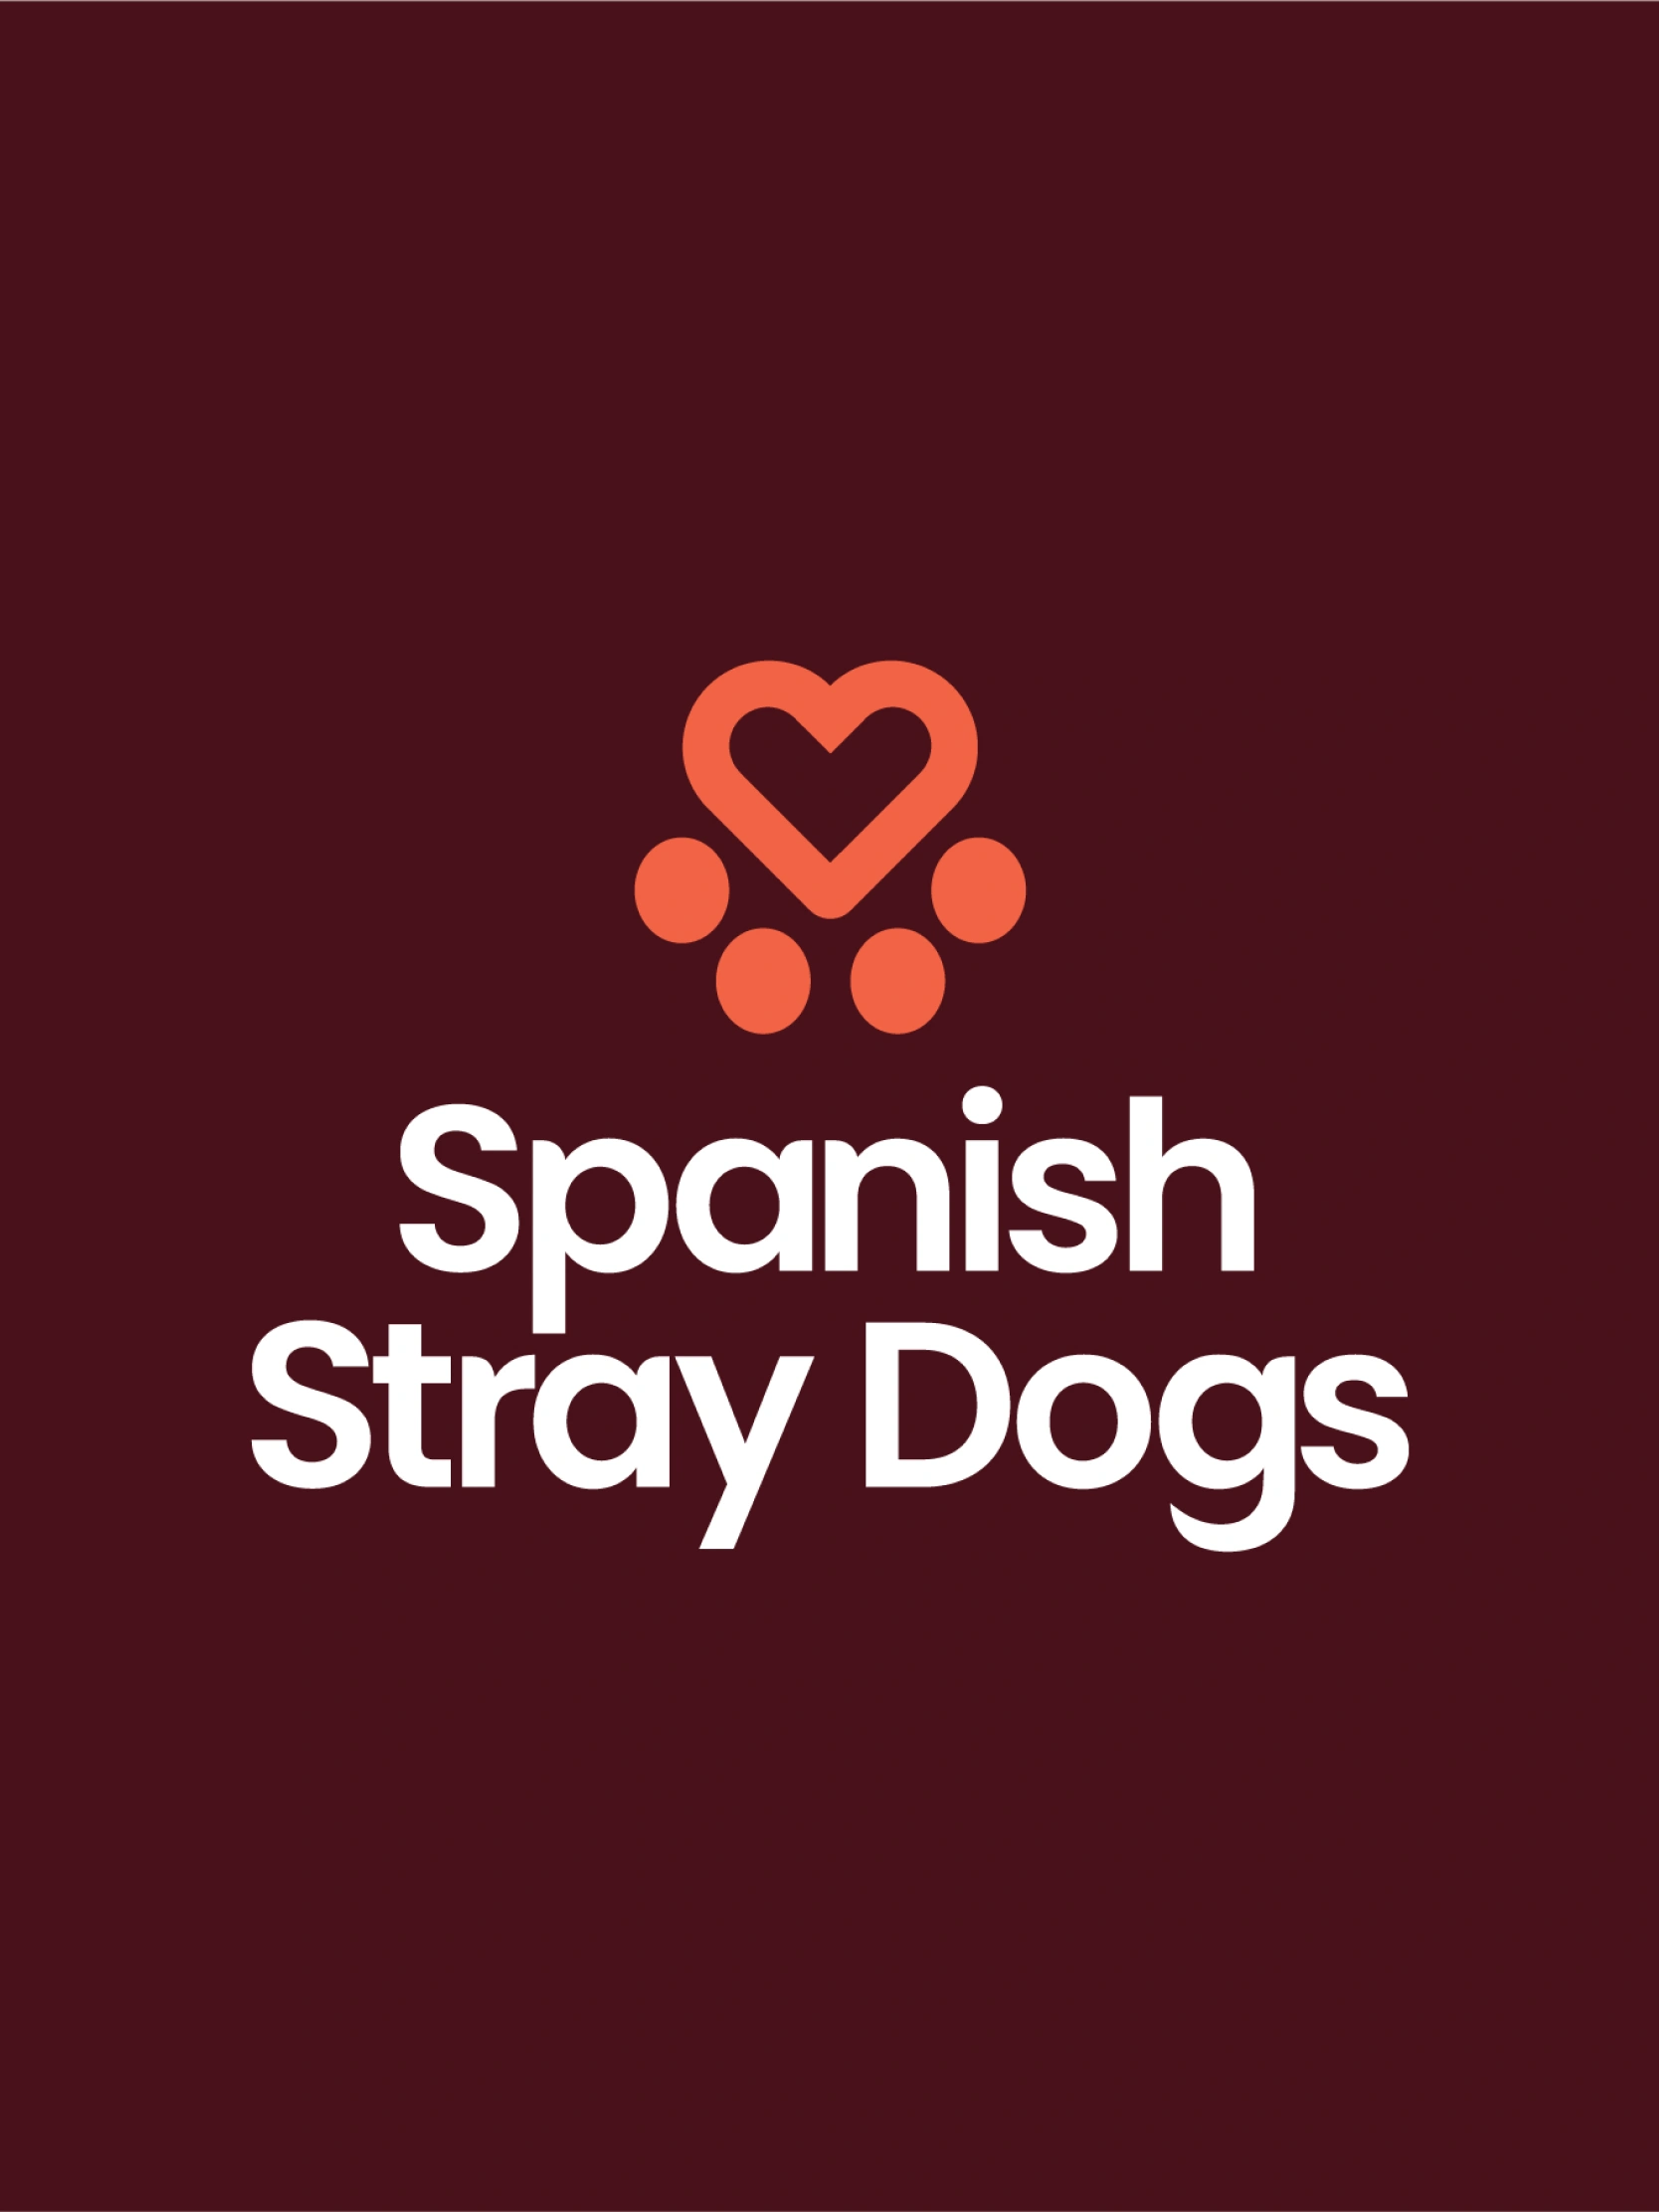 Spanish Stray Dogs logo